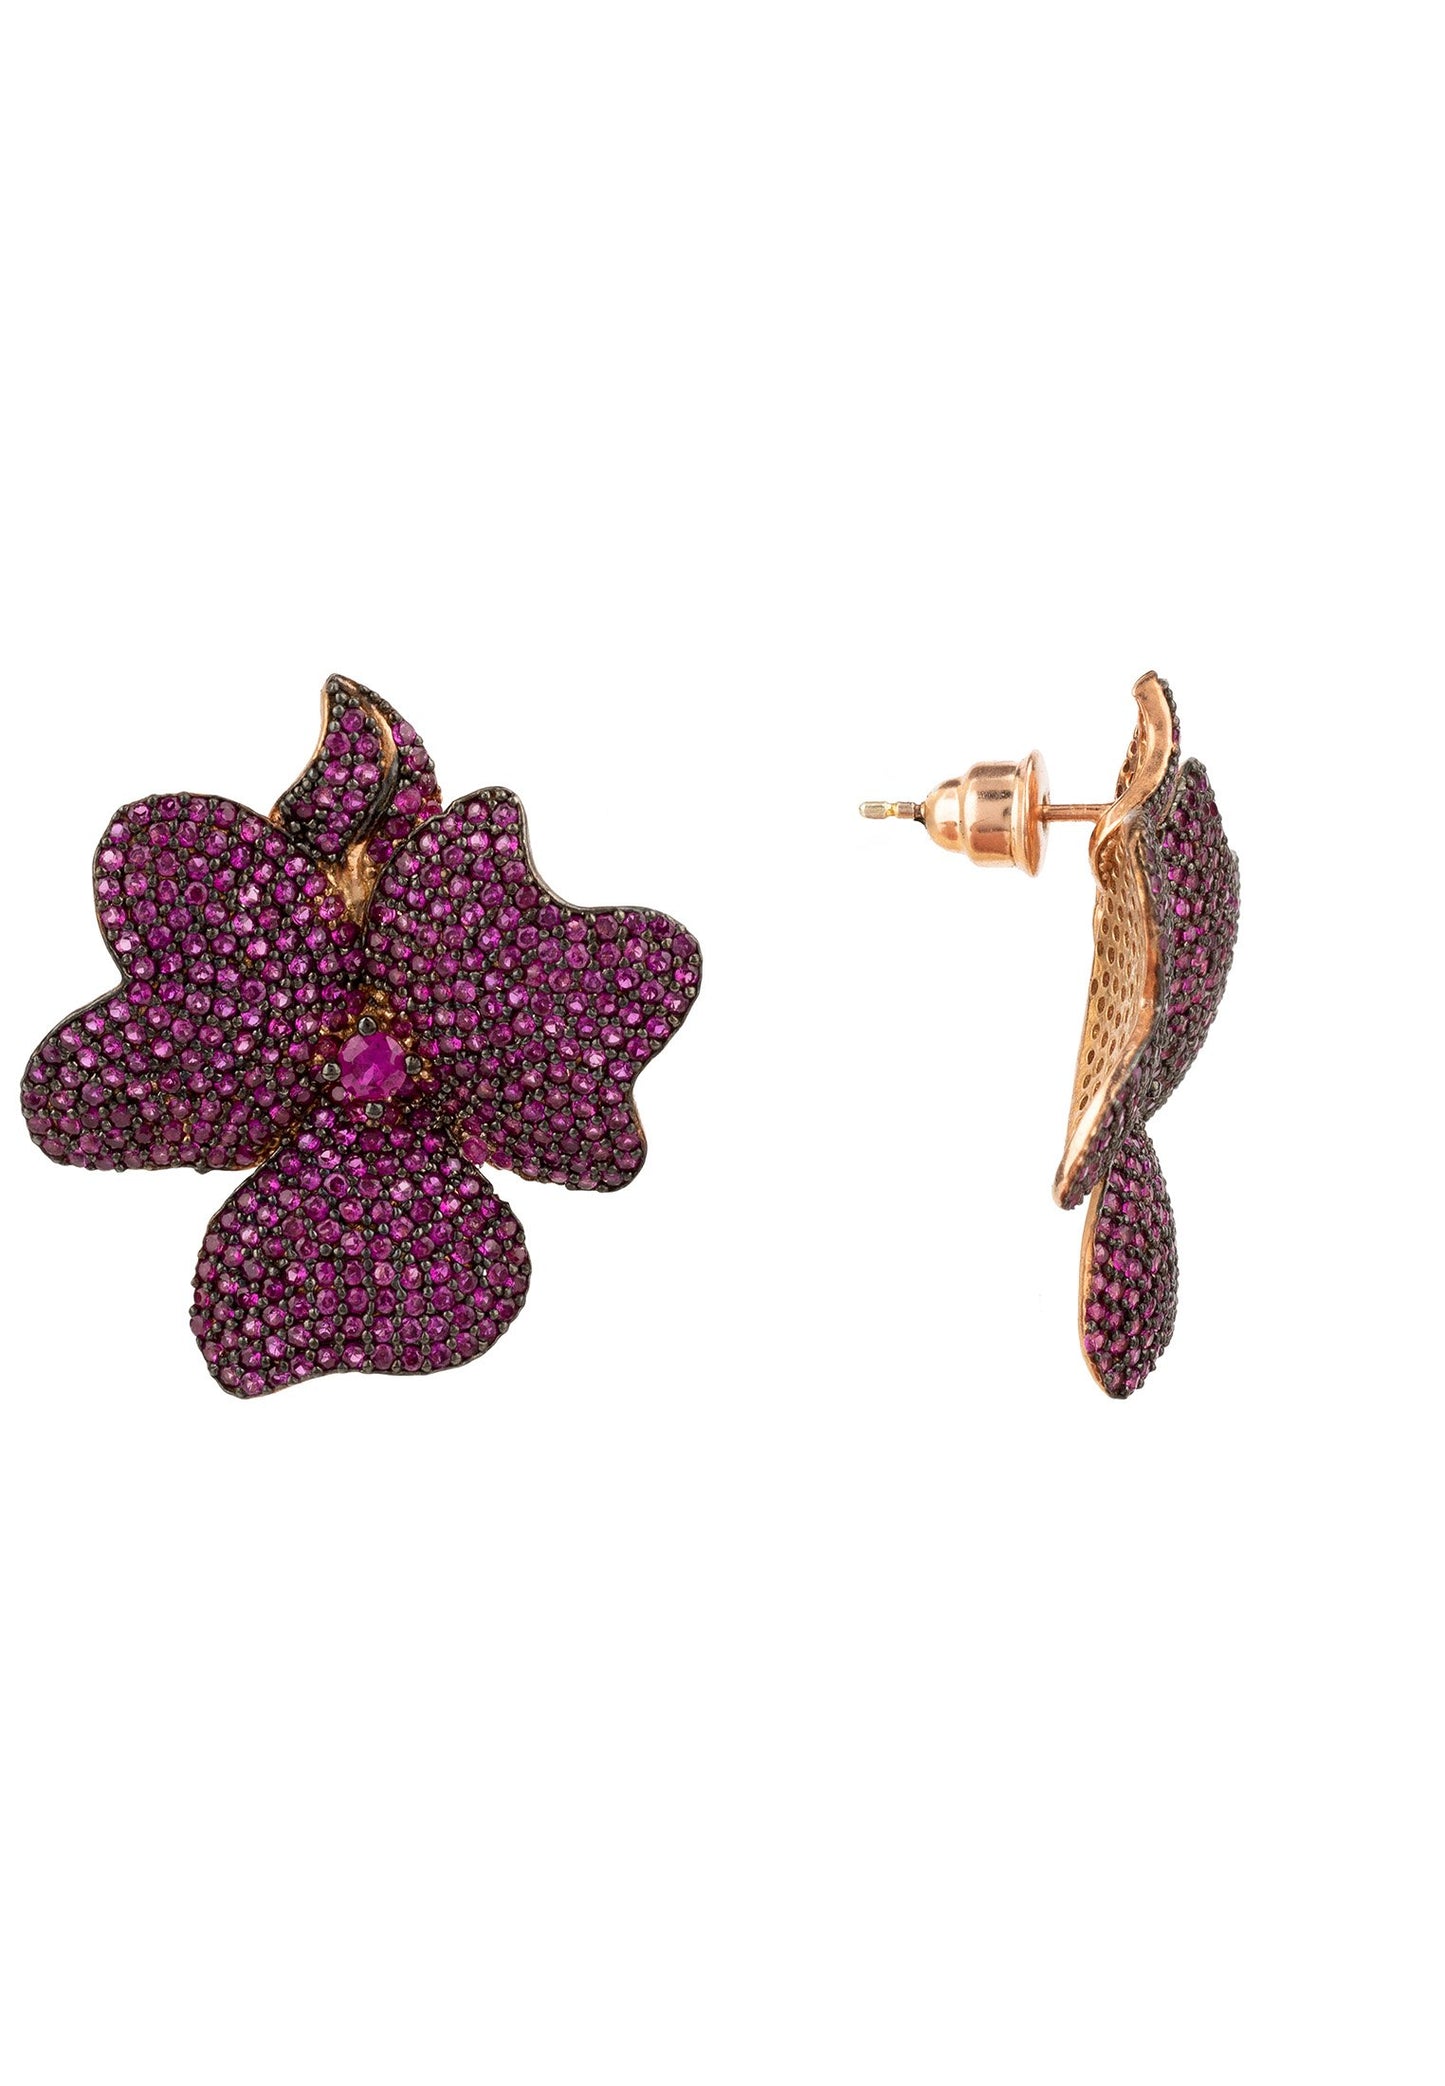 Flower Large Stud Earrings Ruby Rose Gold